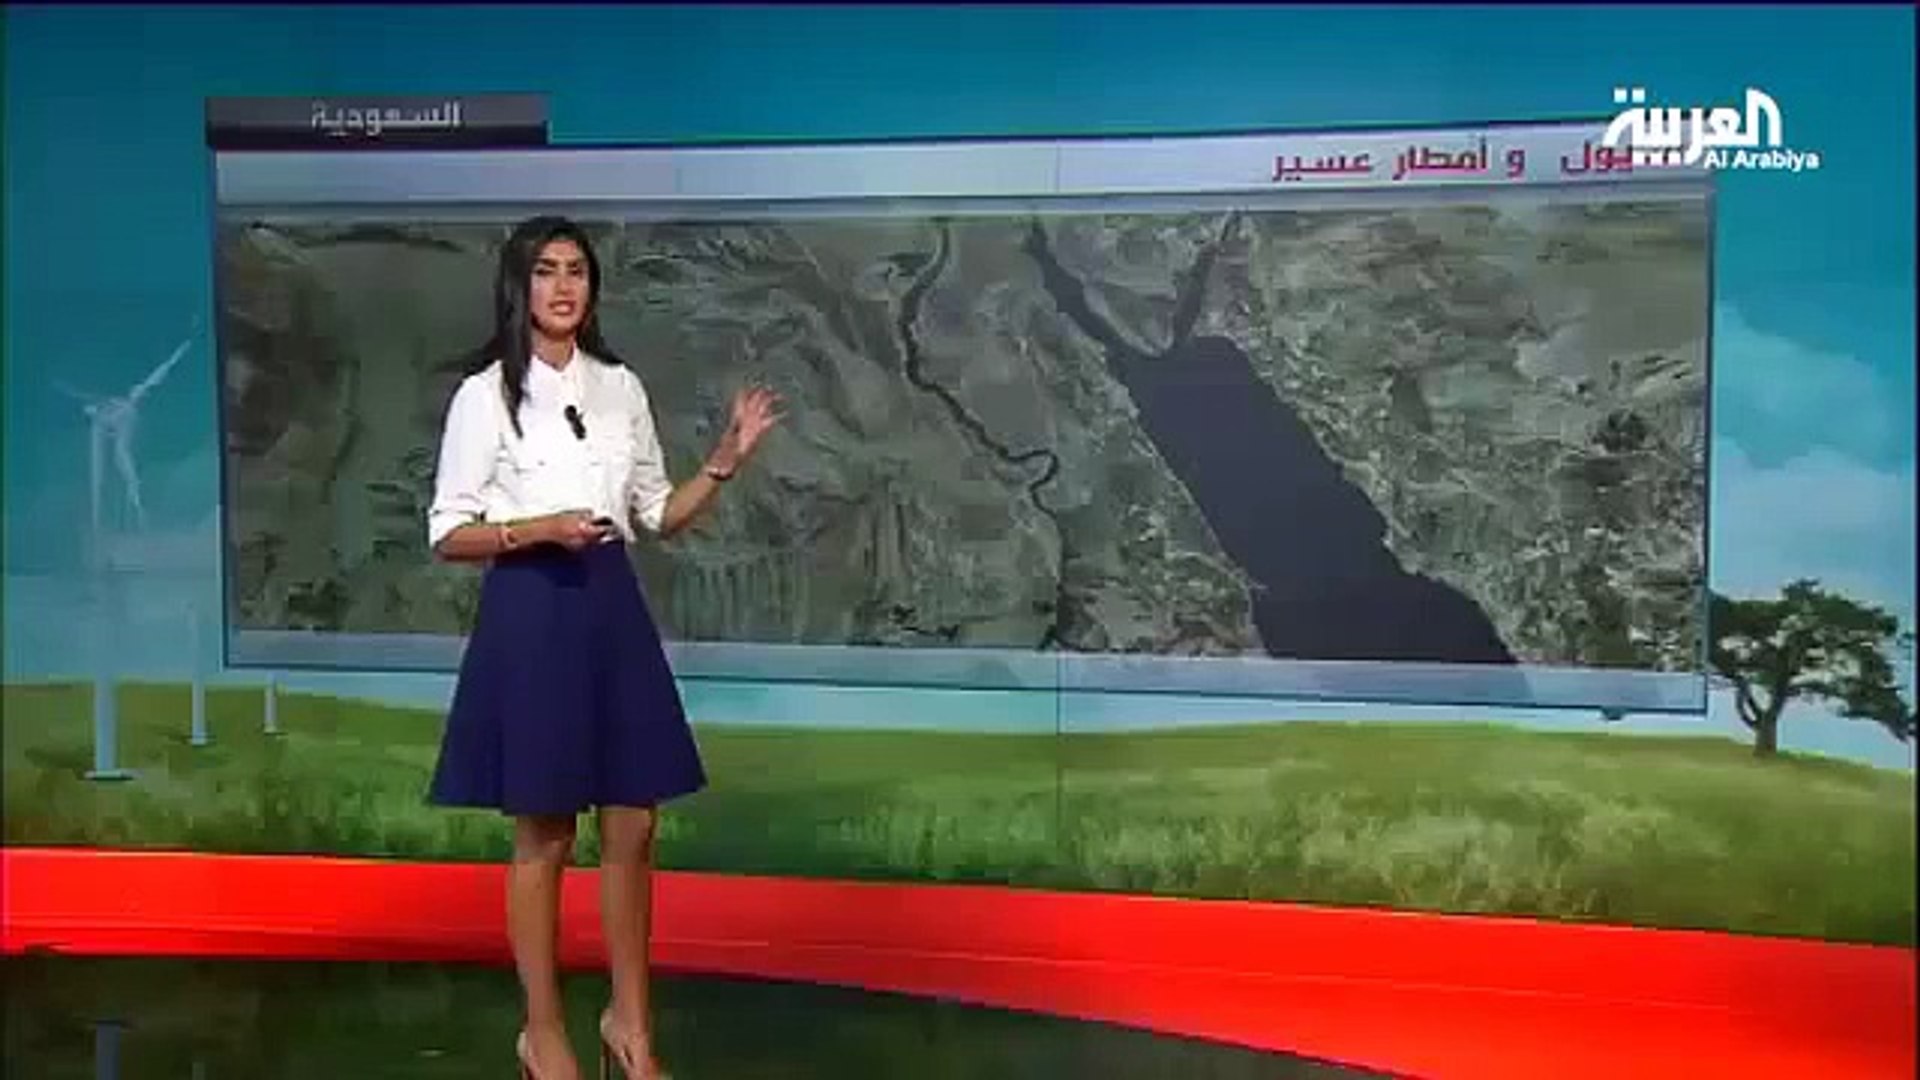 Une présentatrice météo chute en direct sur la chaîne Al-Arabiya - Vidéo  Dailymotion